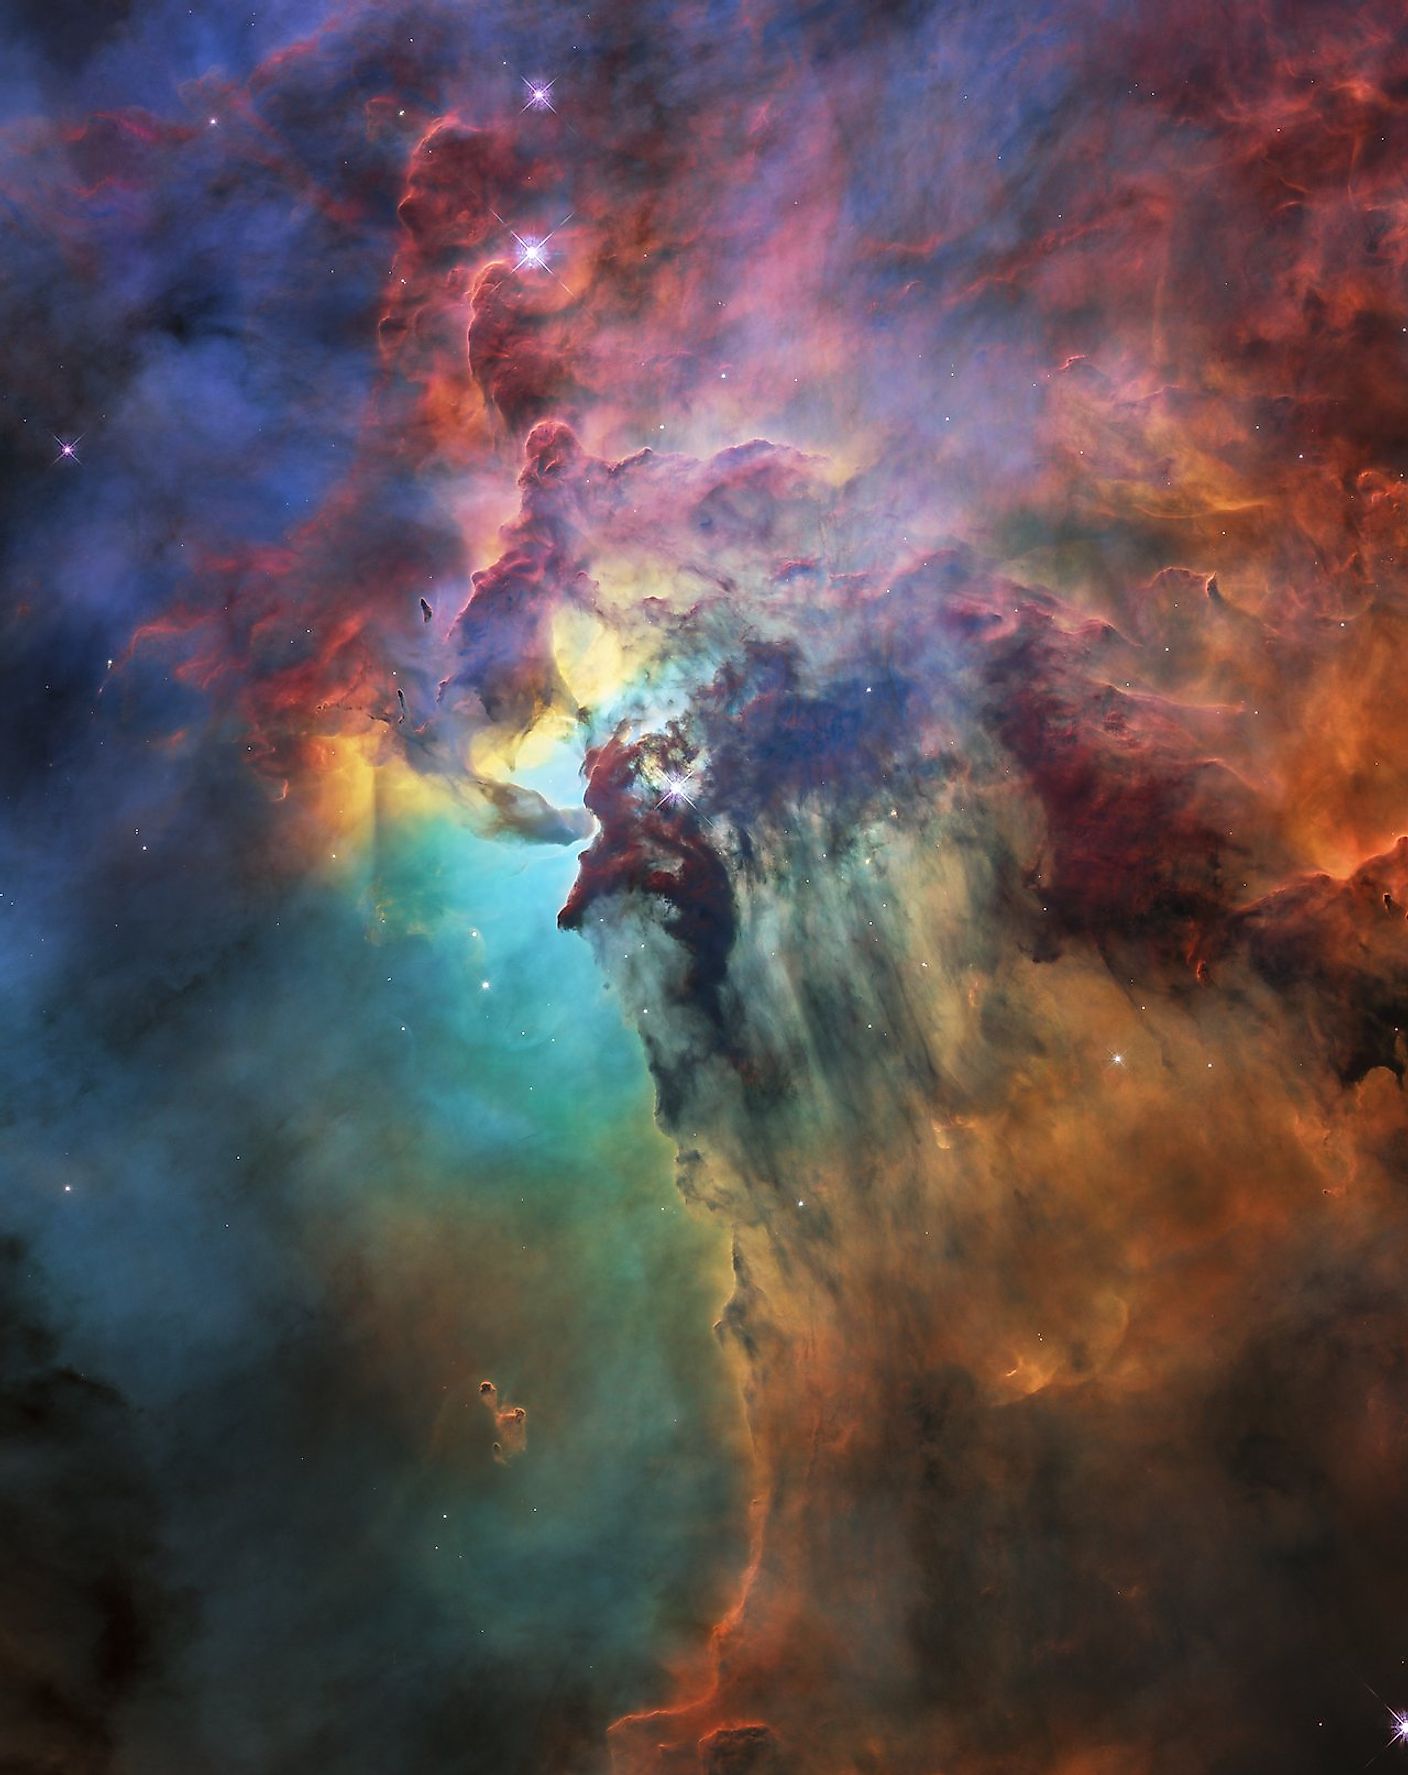 Hubble image of the Lagoon Nebula. Image credit: NASA/ESA